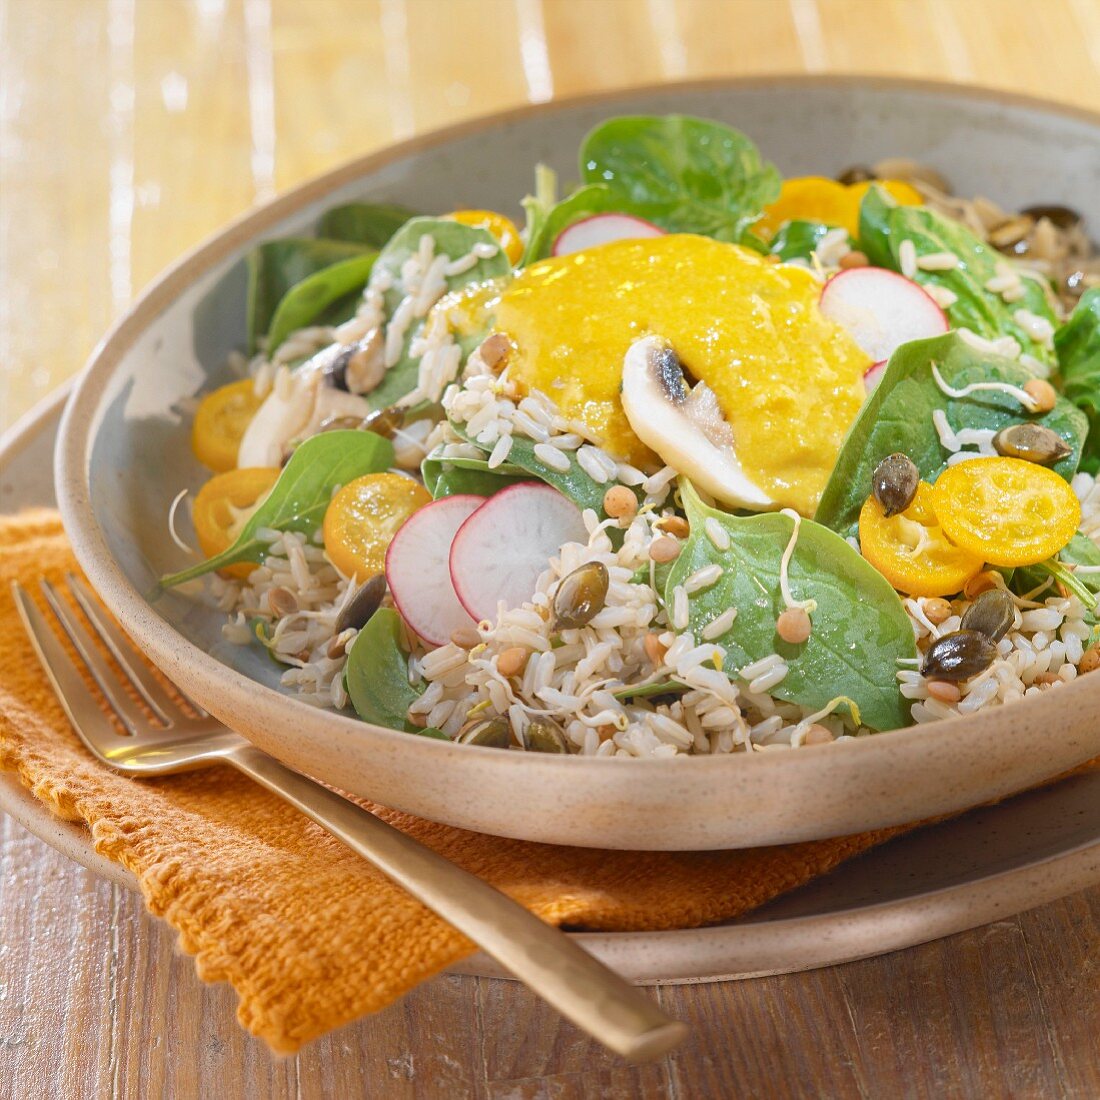 Rice, radish and kumquat salad with curry sauce